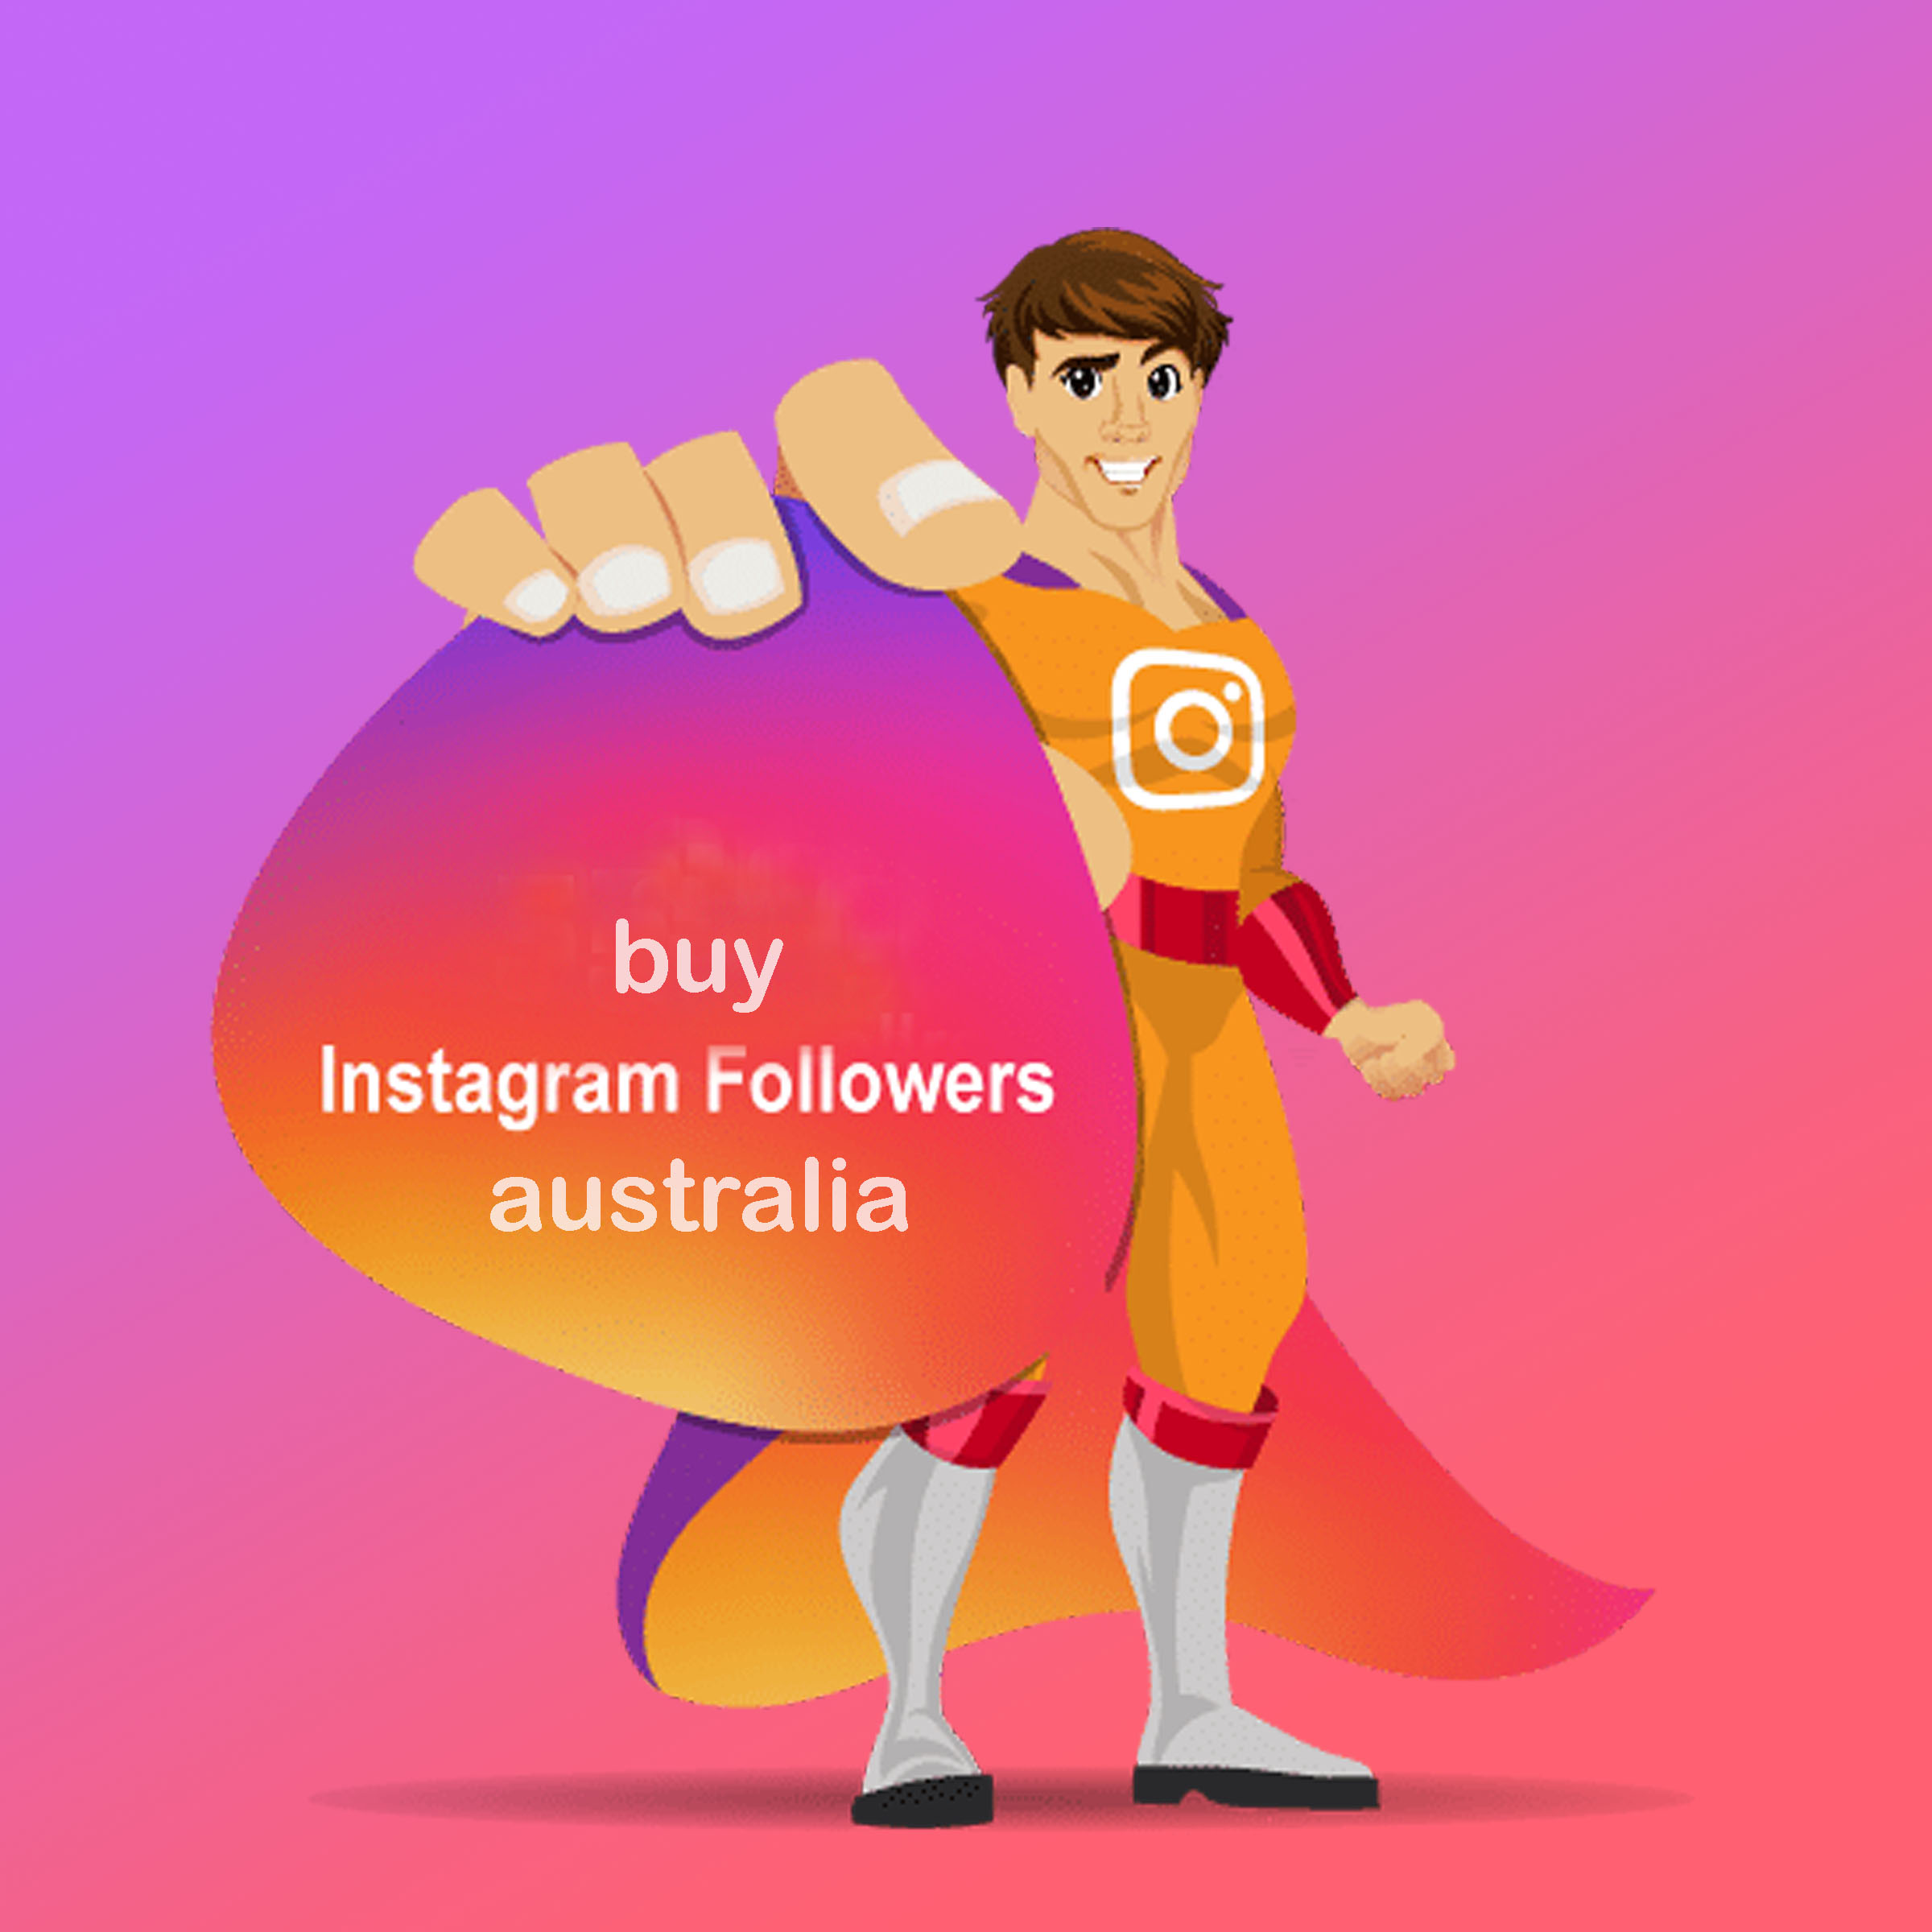 Buy Instagram Followers australia